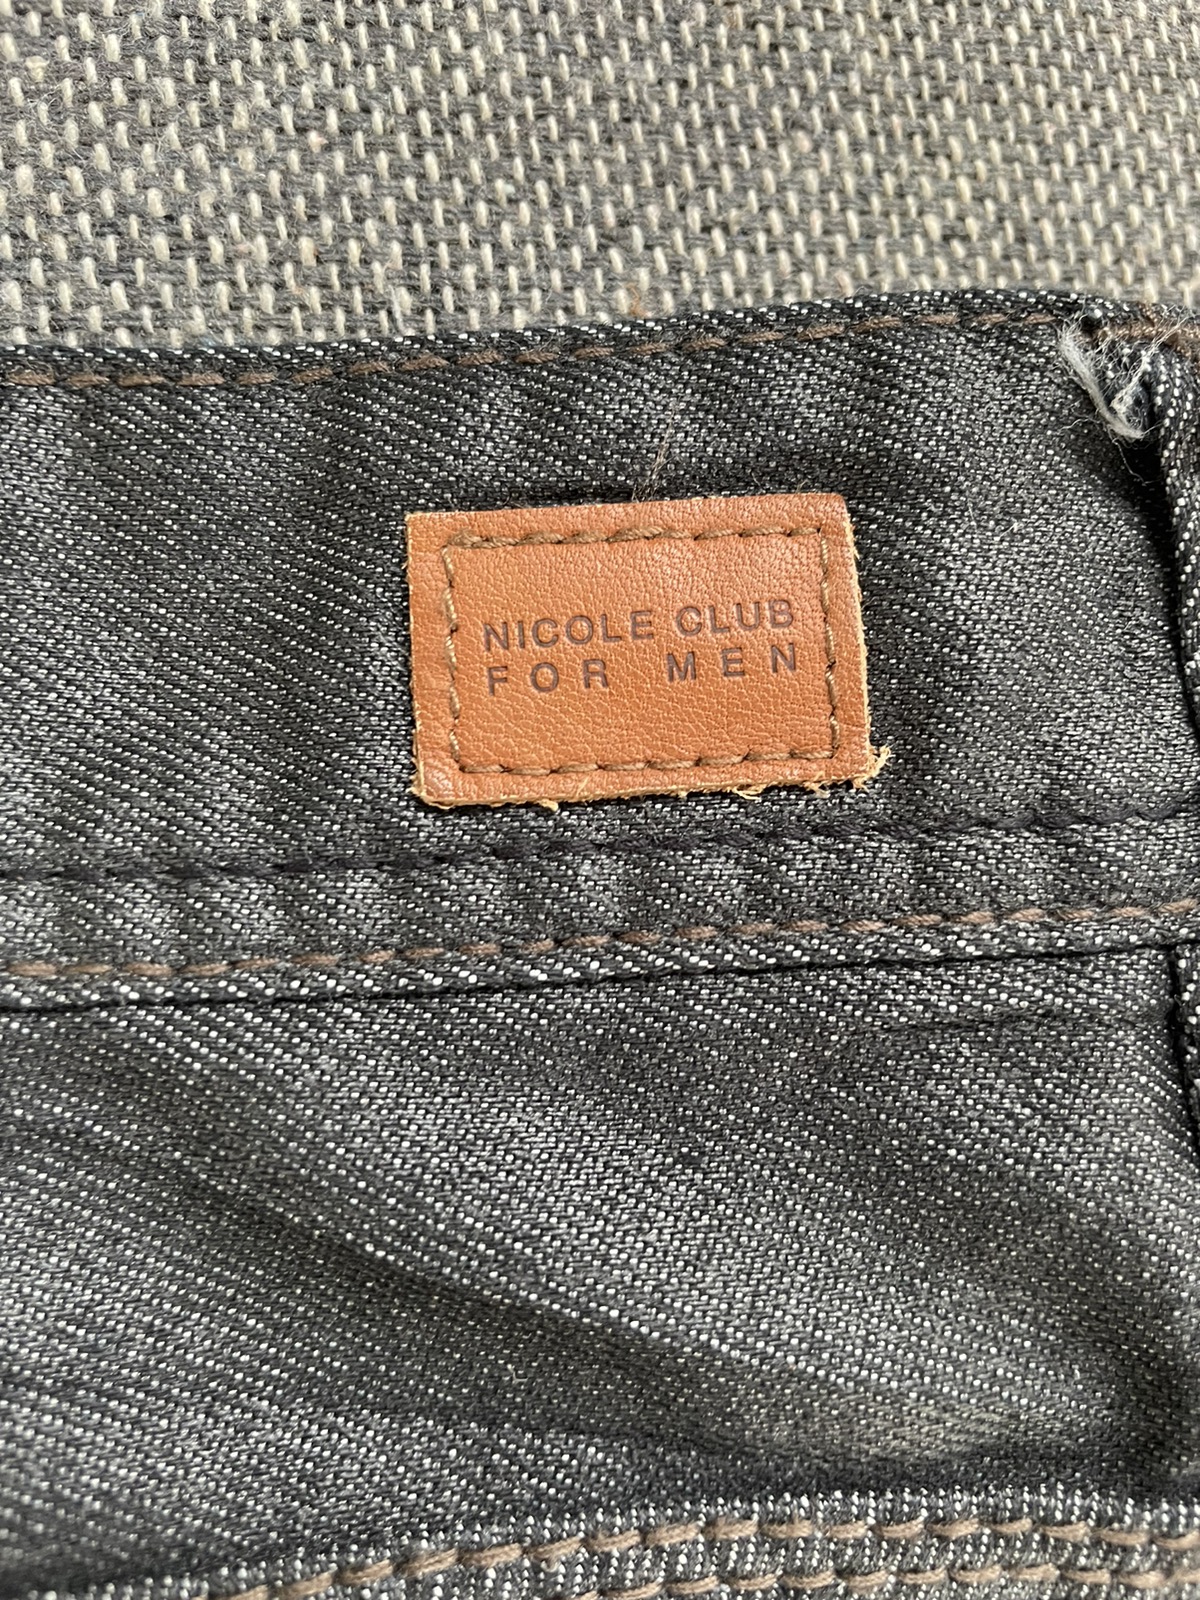 Designer - Nicole Club For Men Flare Light Jeans - 15